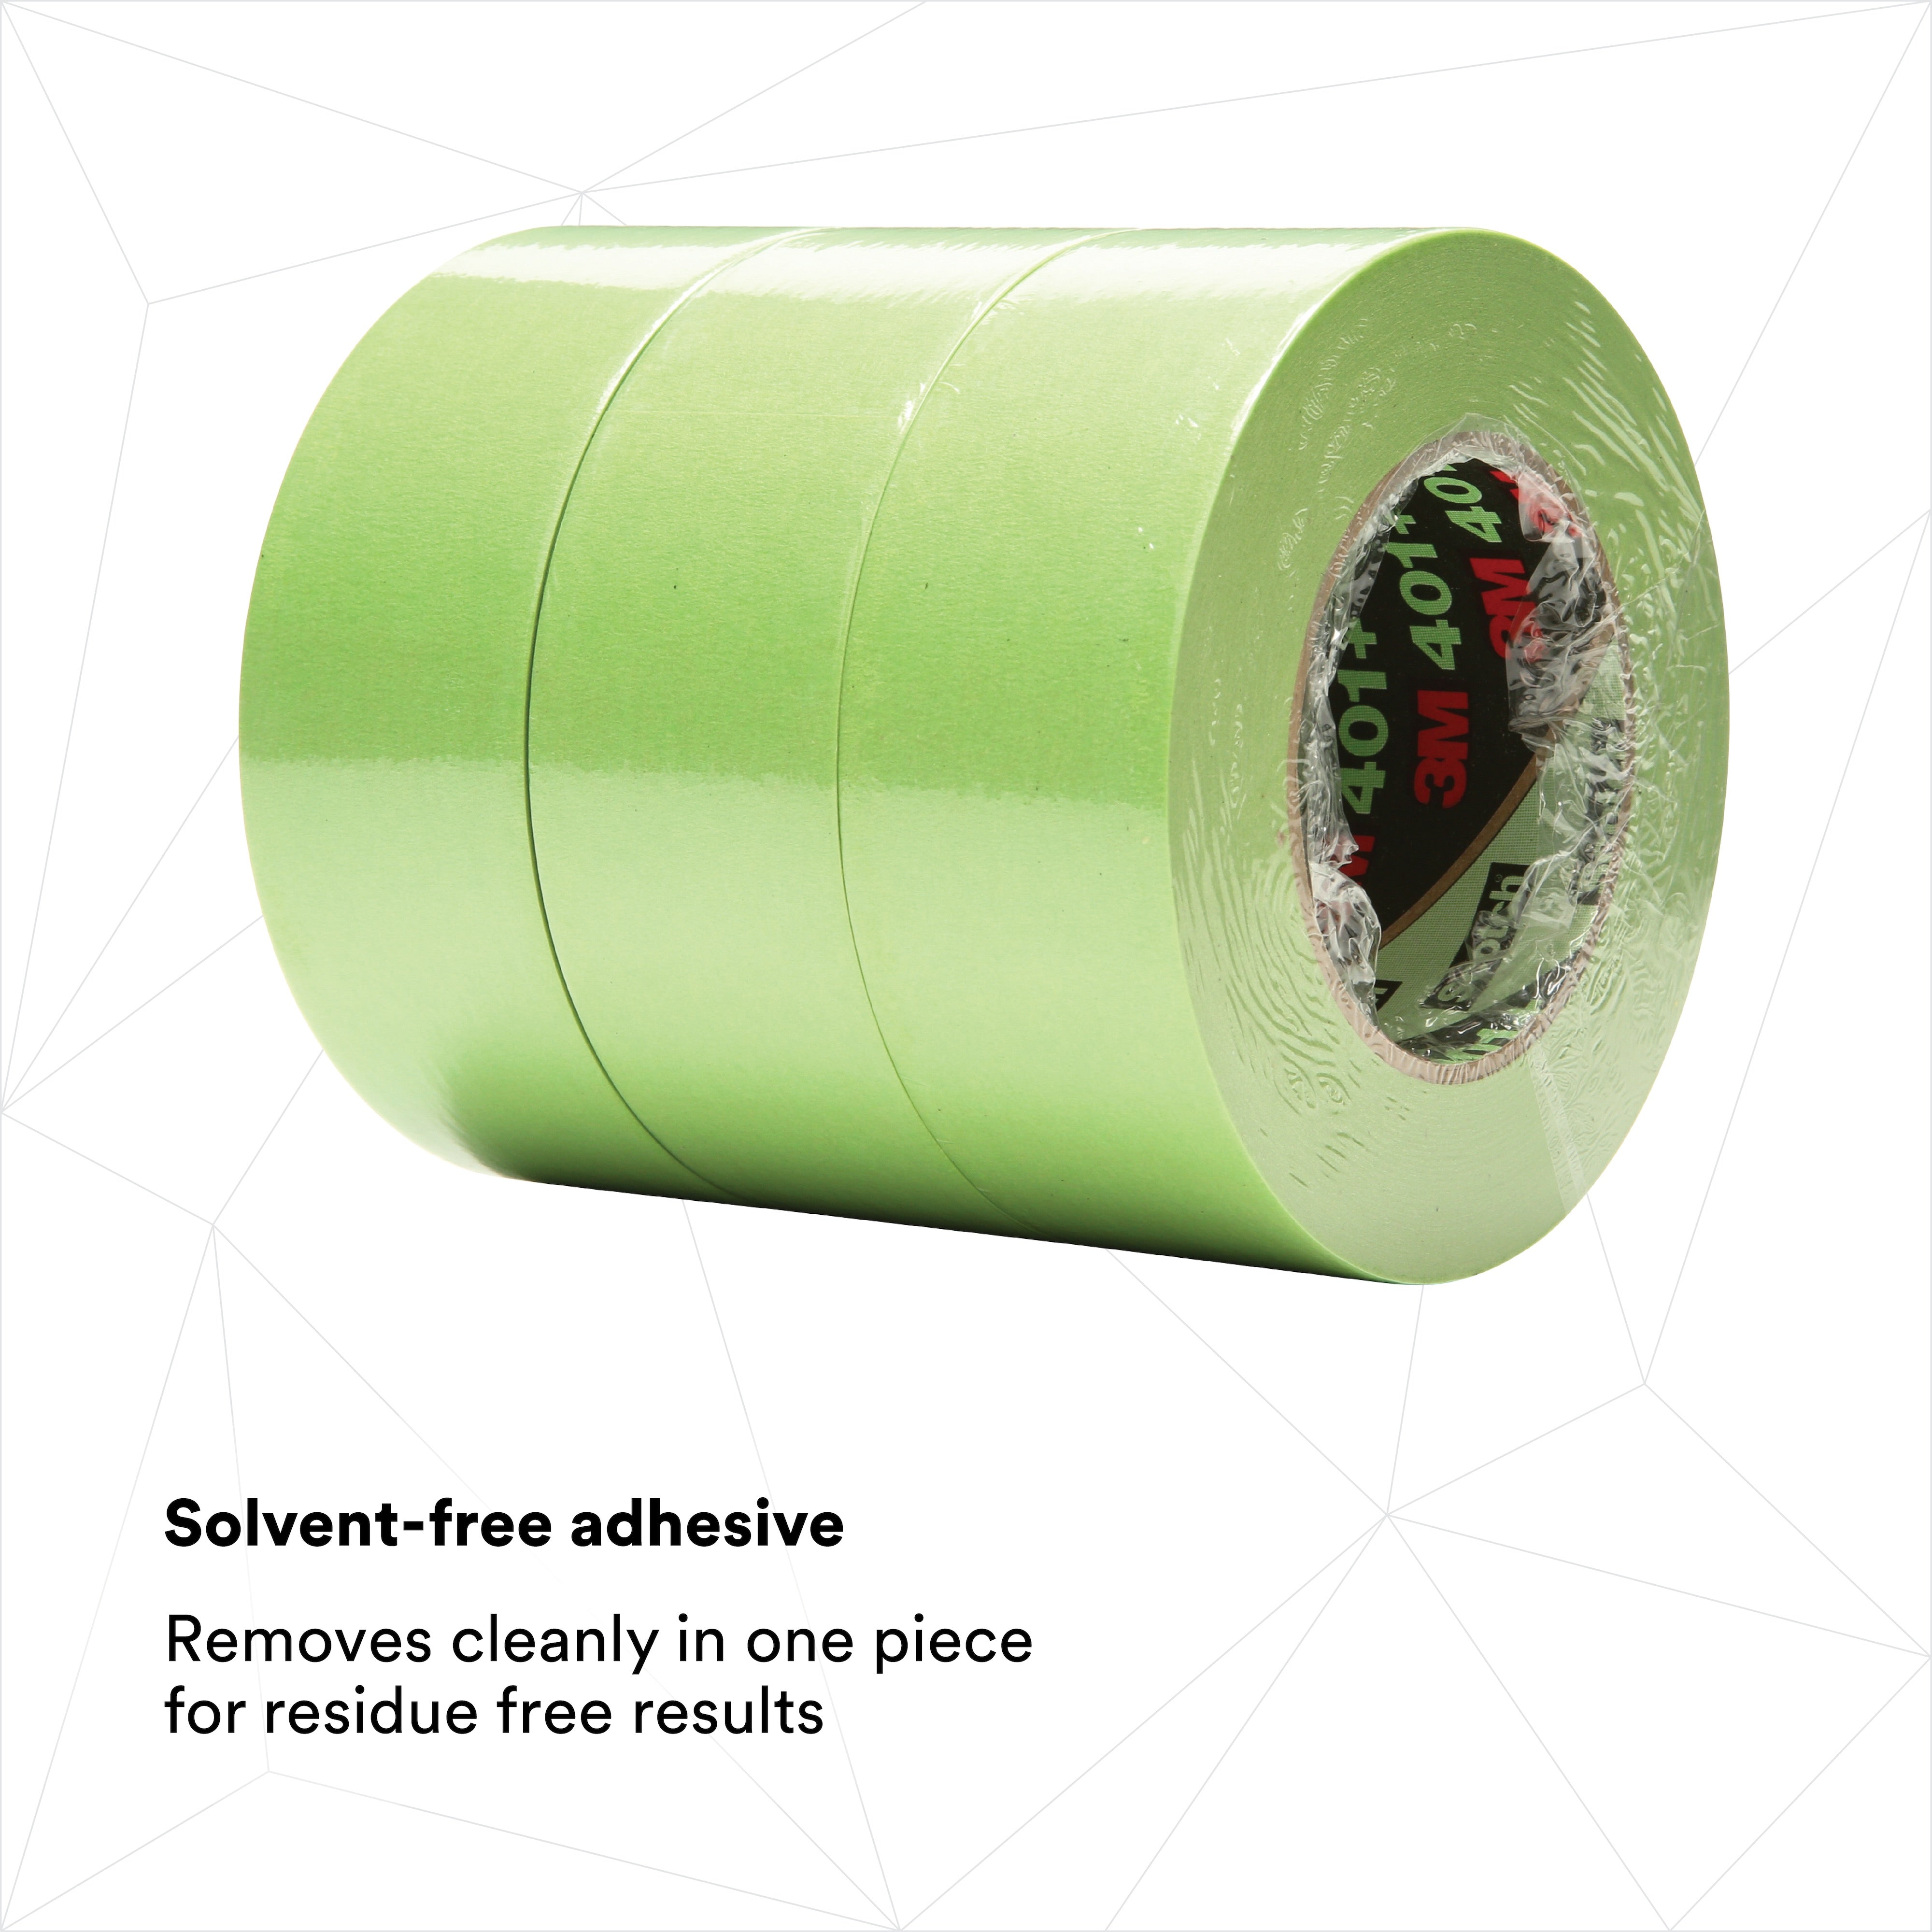 3M High Performance Green Masking Tape 401+, 48 mm x 55 m 6.7 mil, 12 Roll/Case